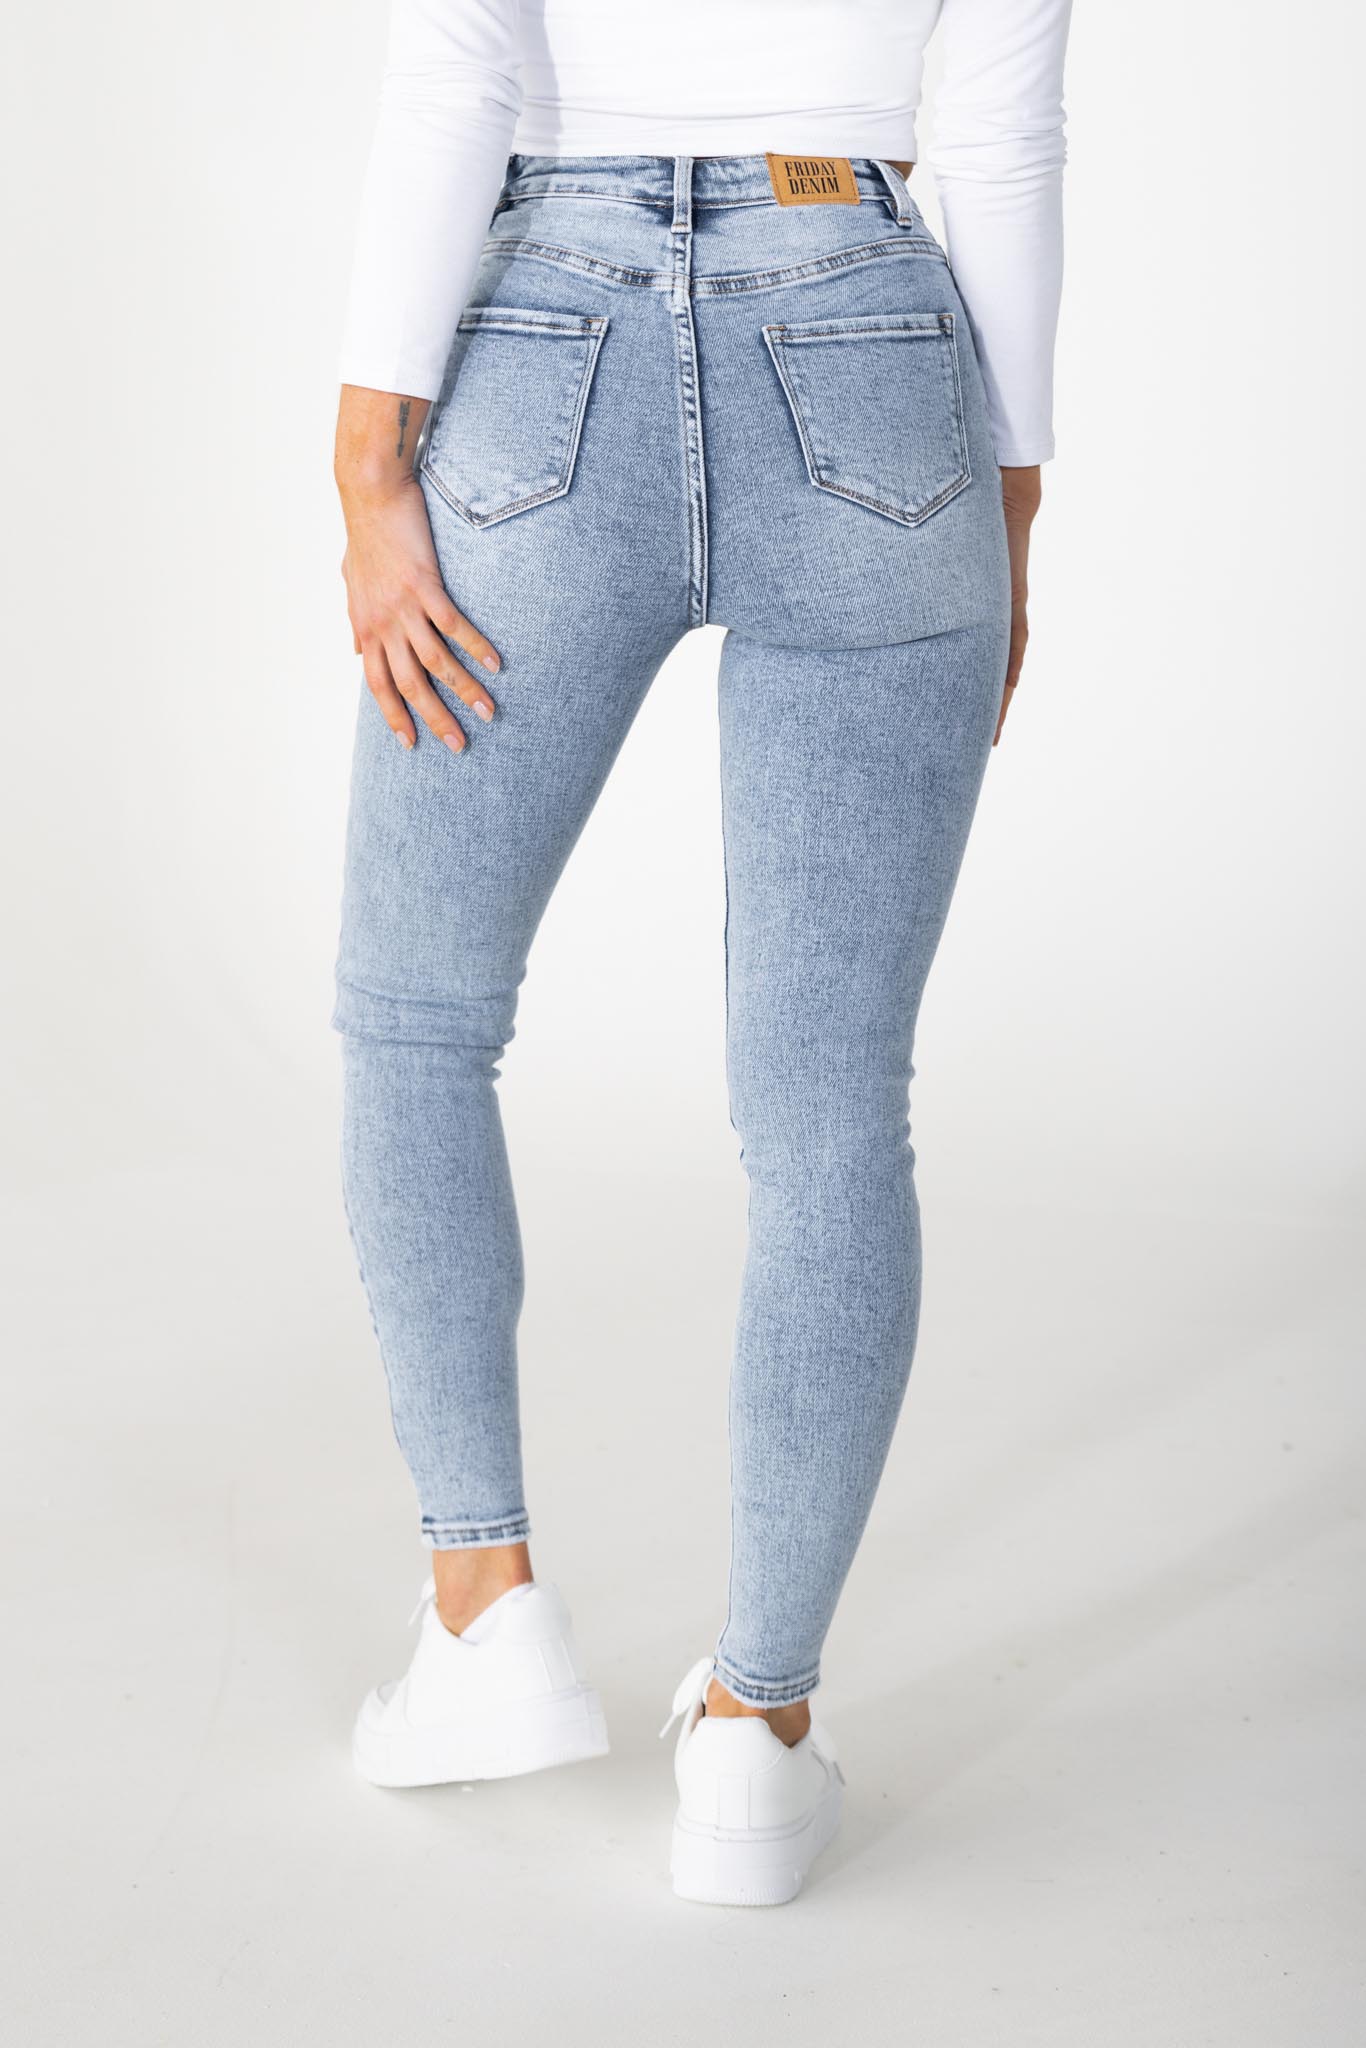 Worden maximaliseren Oprecht Donkerblauwe skinny jeans | Jeans | tess v